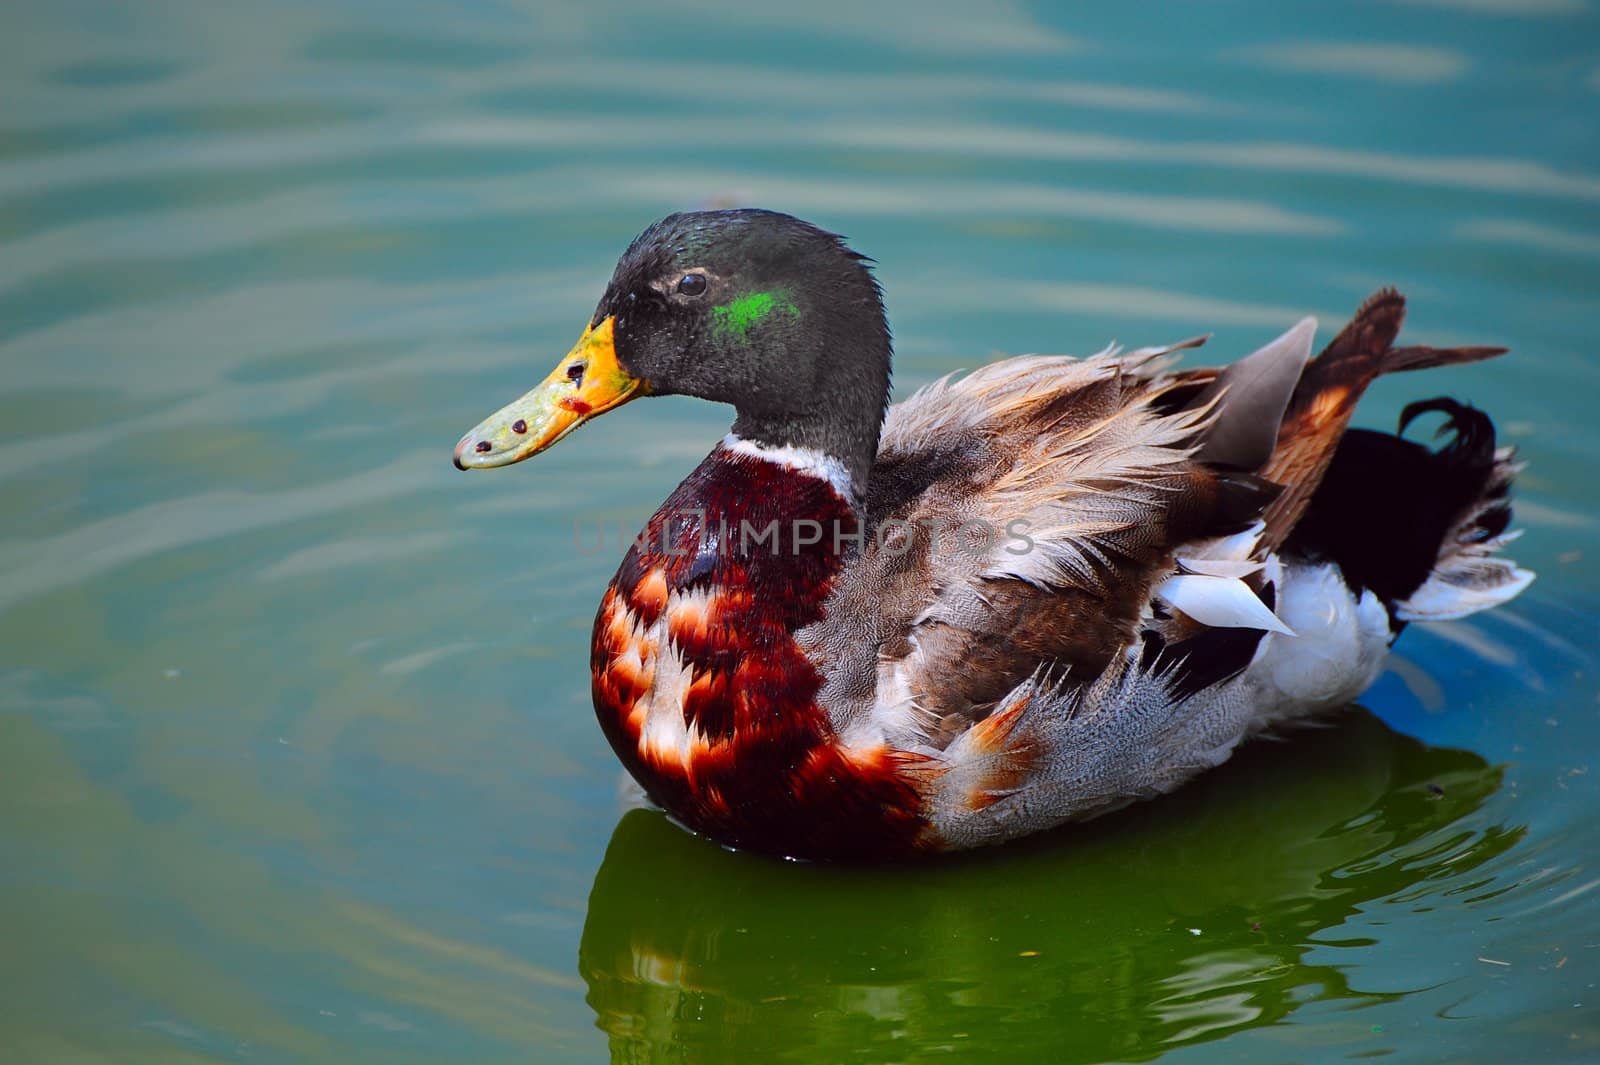  Duck  by gkuna